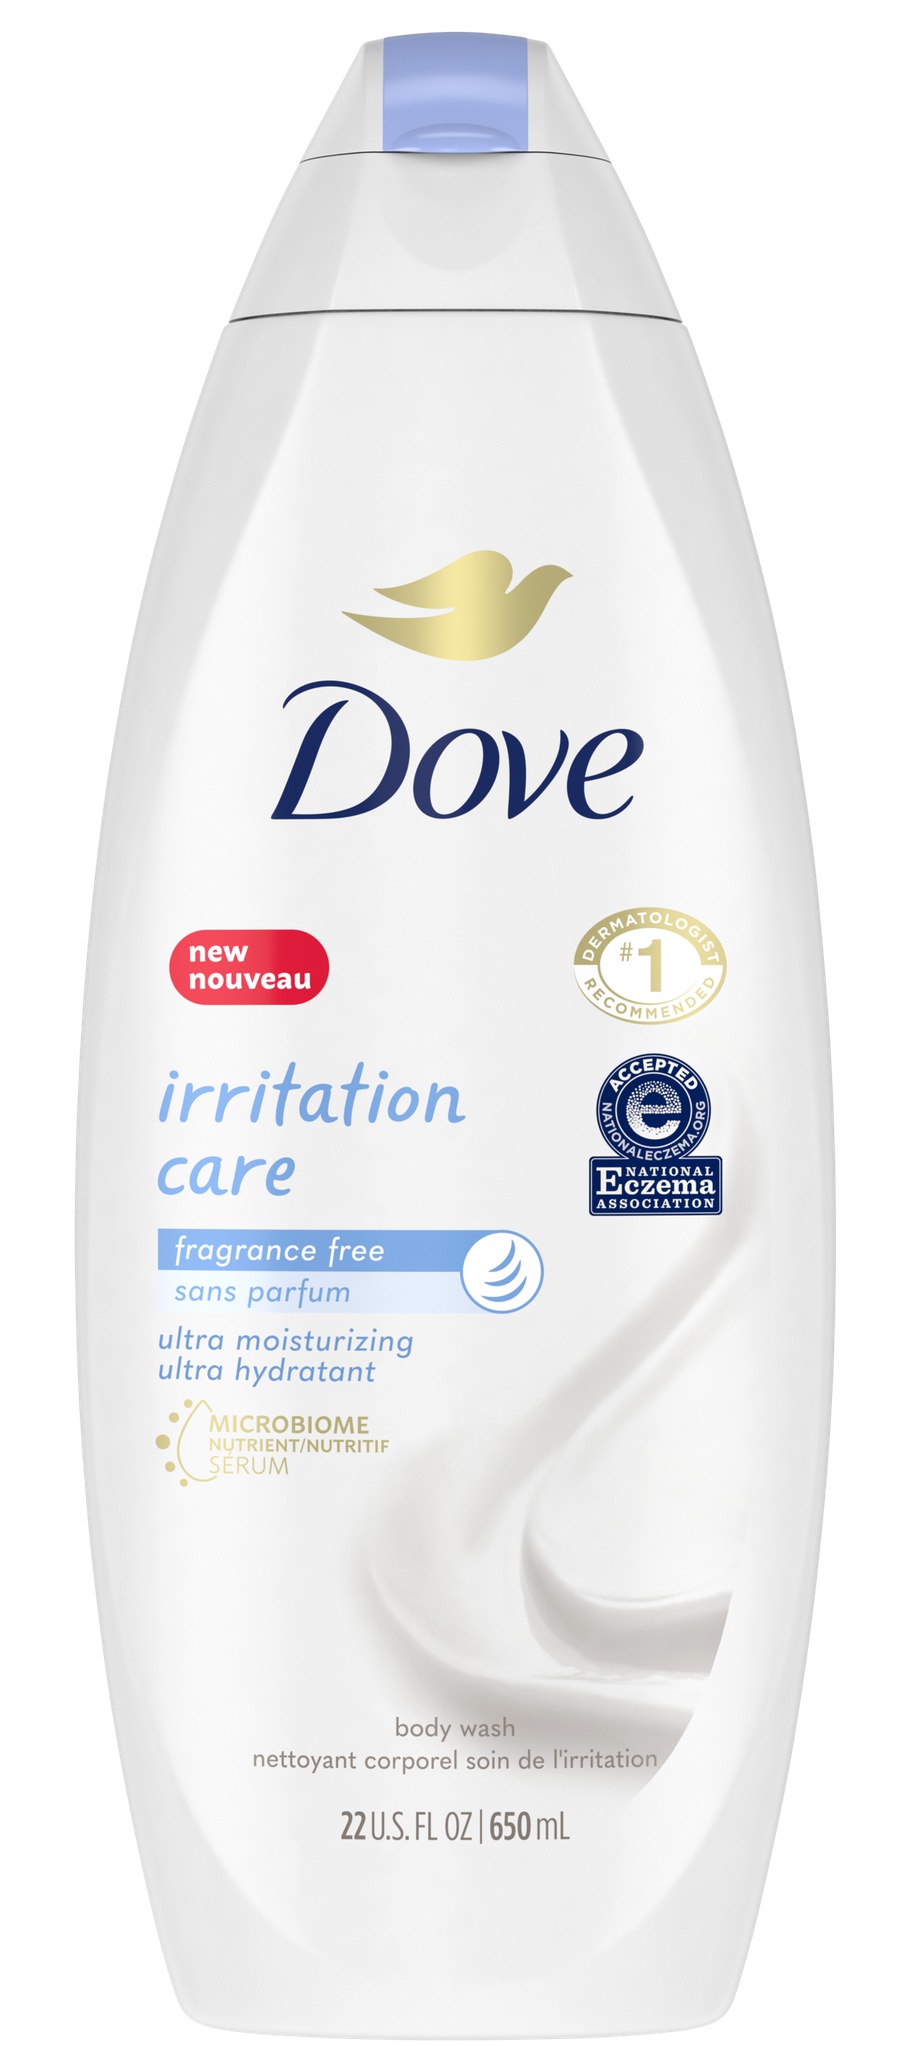 Dove Irritation Care Body Wash